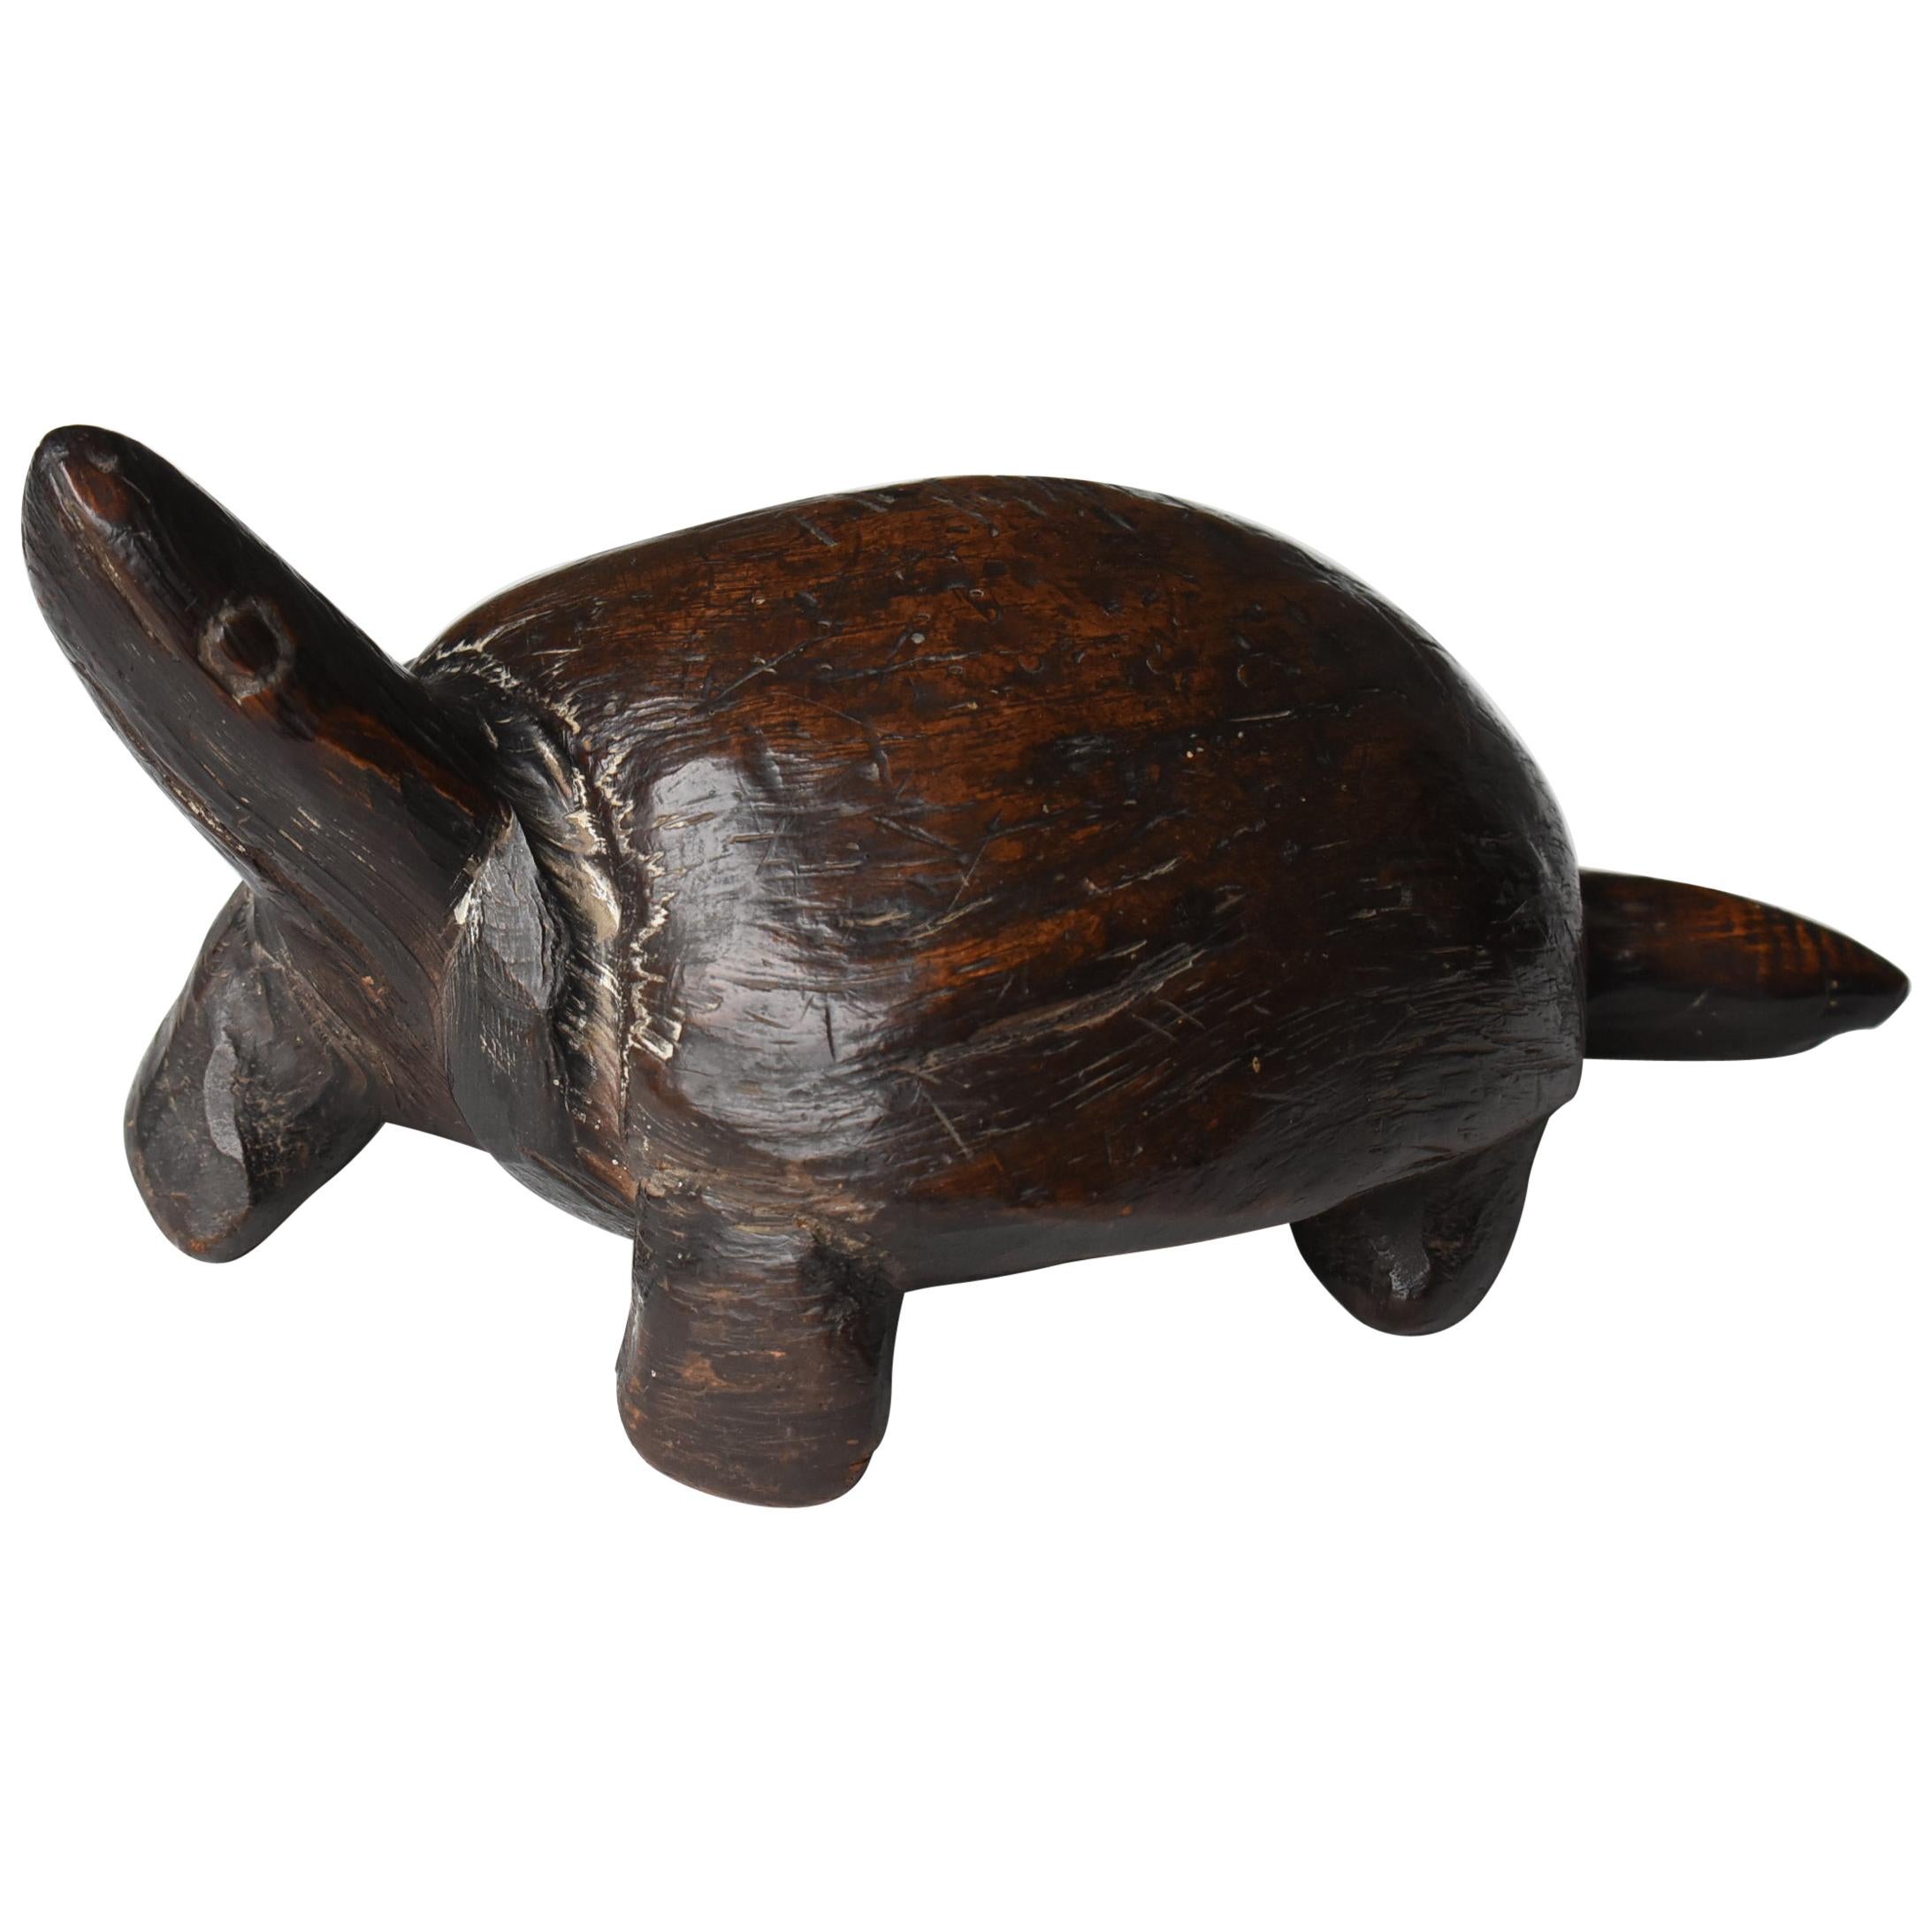 Japanese Old Wood Carving Turtle 1900s-1920s/Antique Figurine Sculpture Fork Art